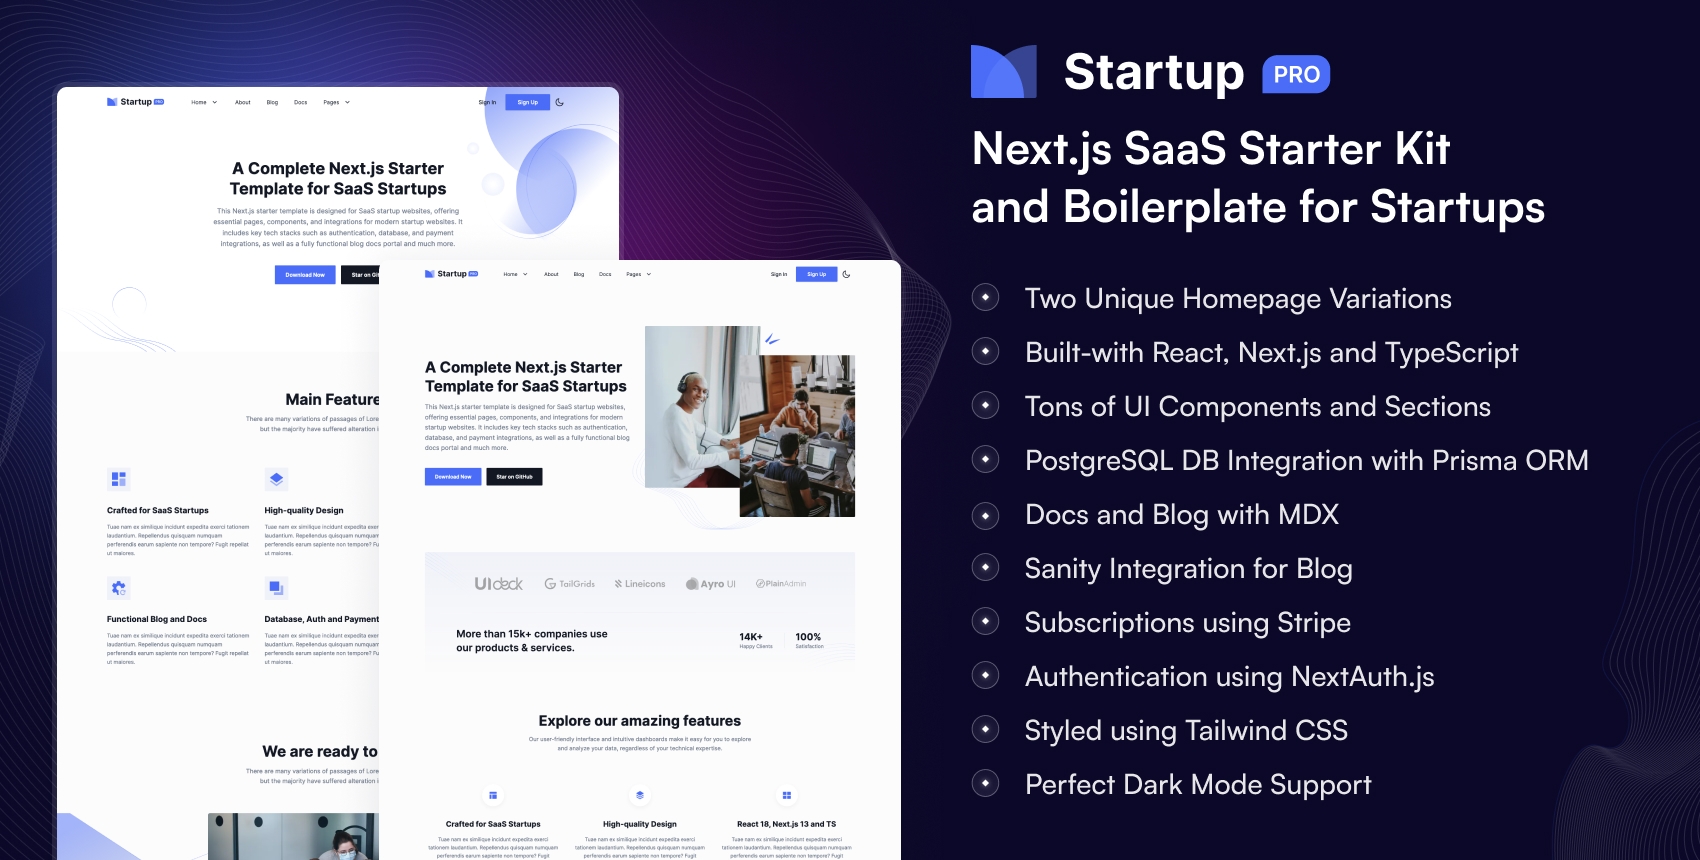 Next.js SaaS Starter Kit and Boilerplate for Startups